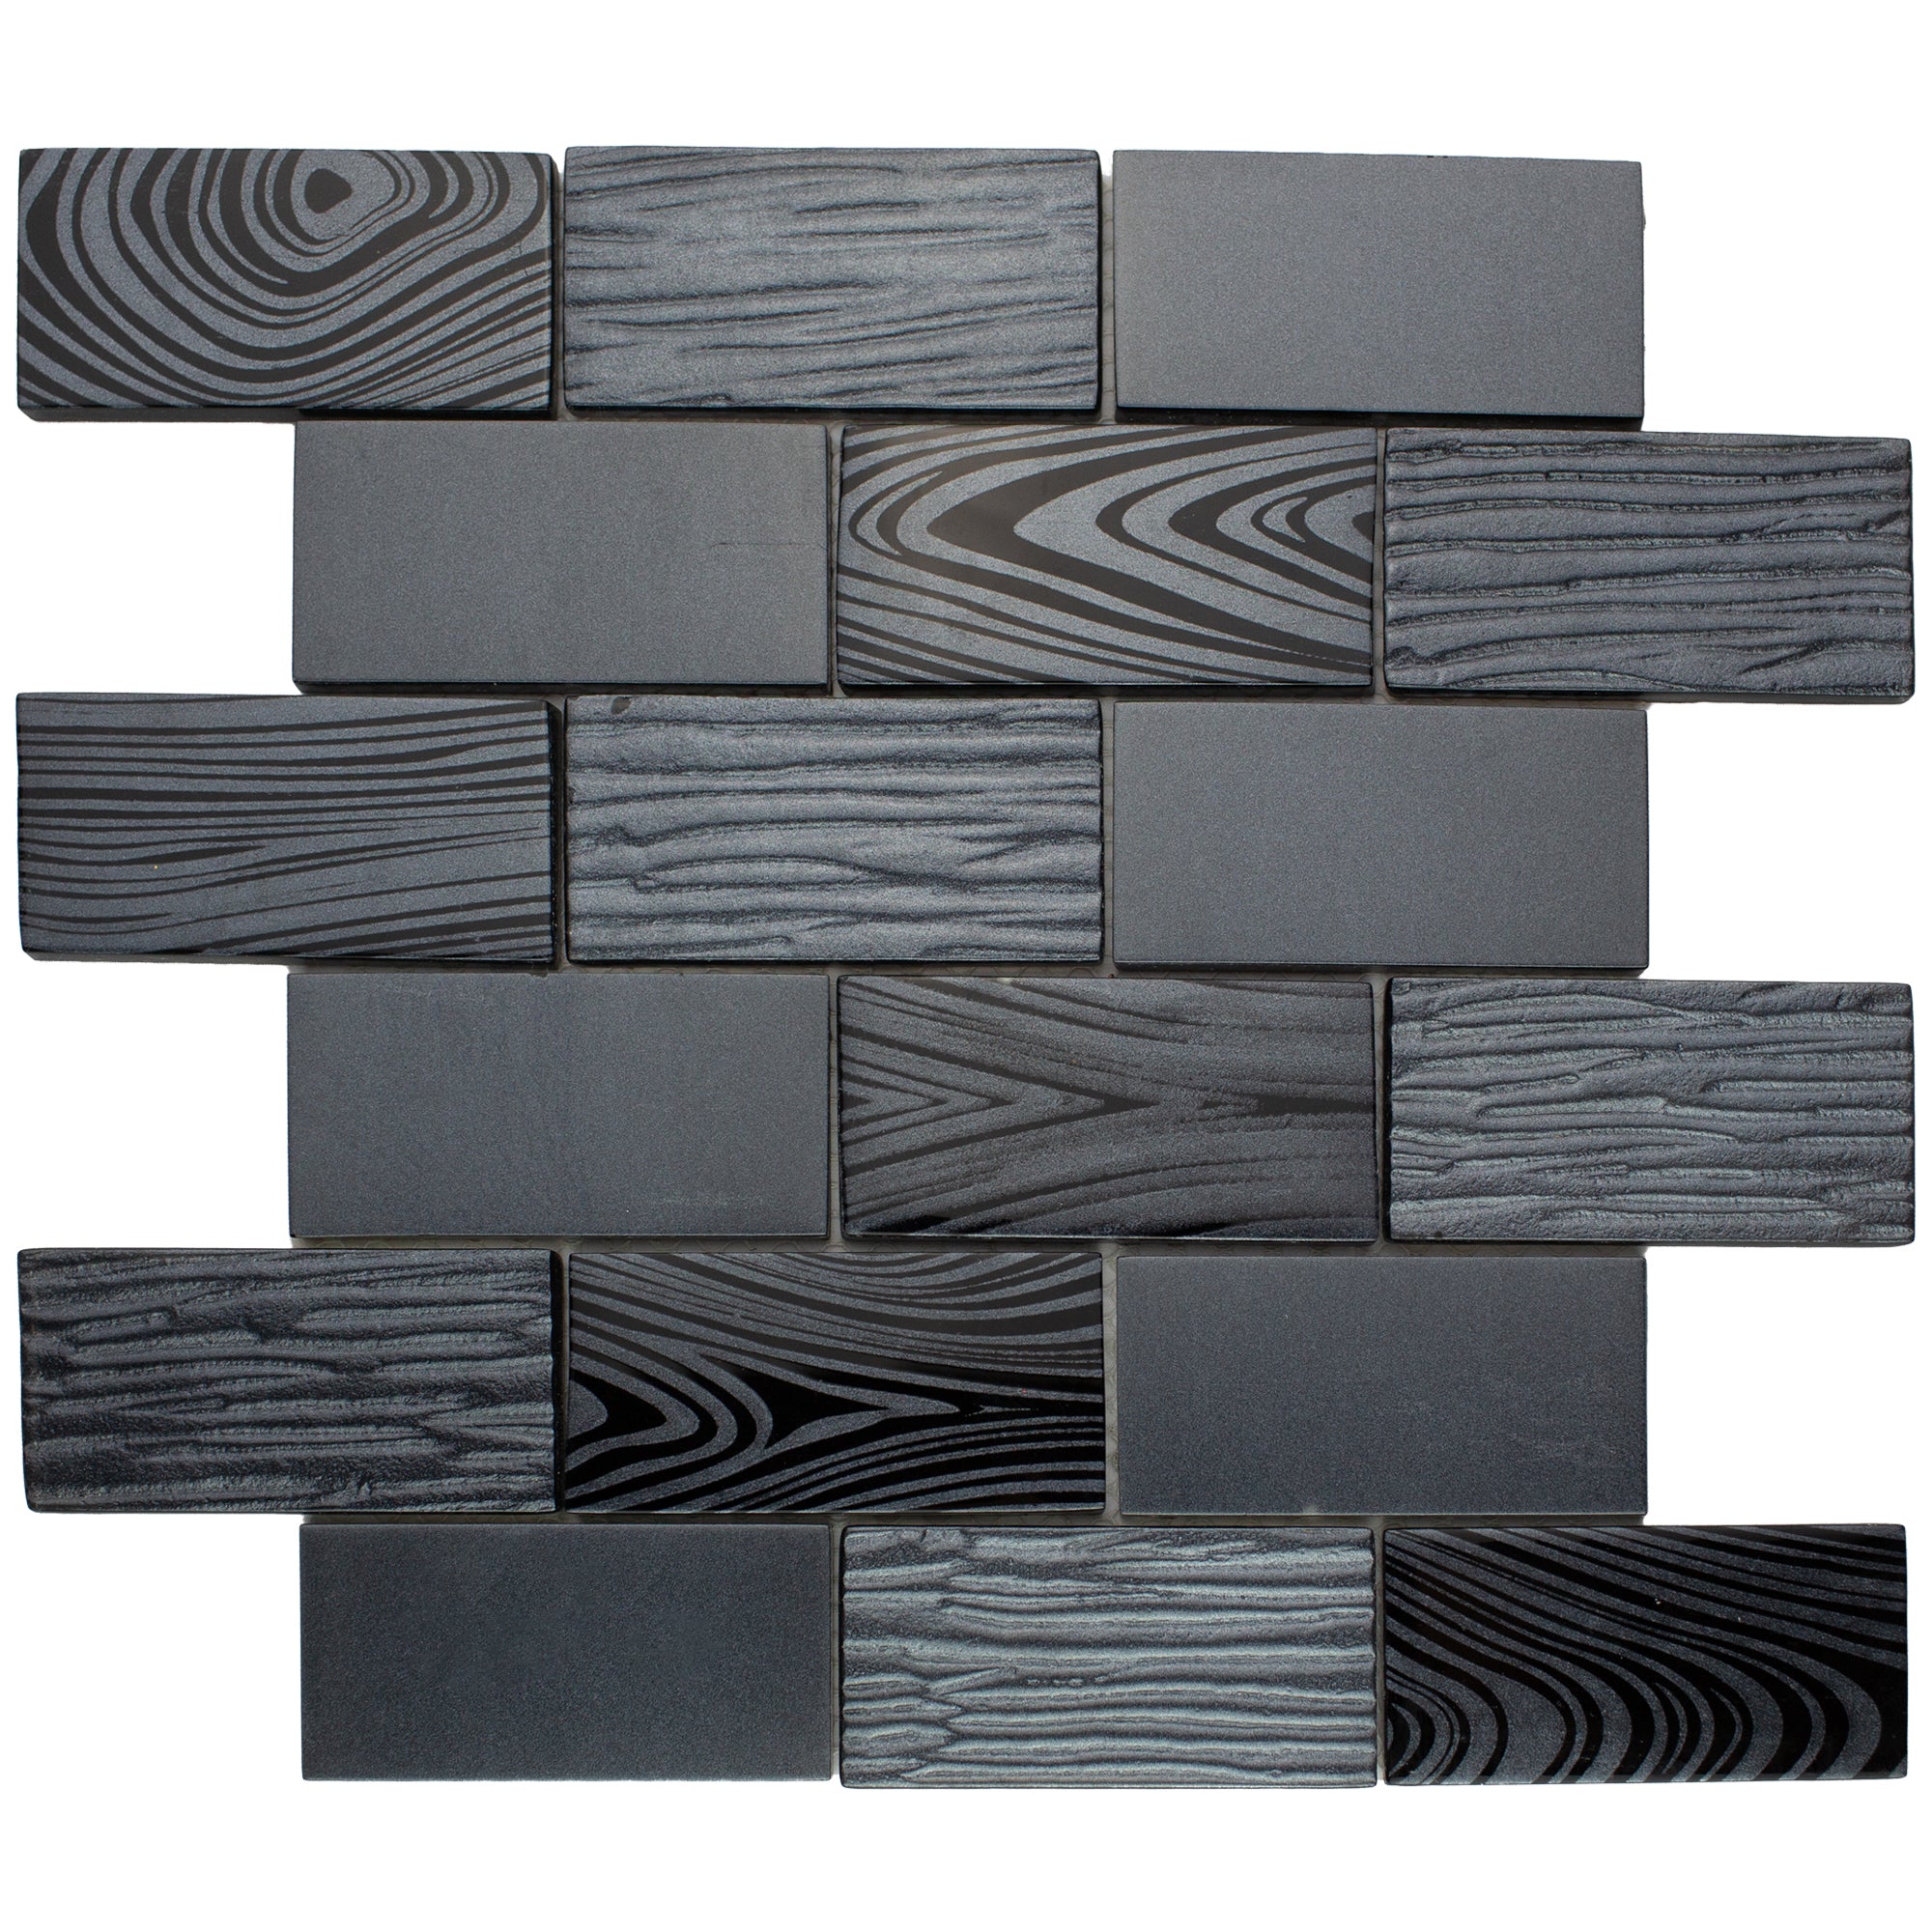 TDKTG-03 2x4 wood look Grey Black Metal Paint Effect Glass Subway